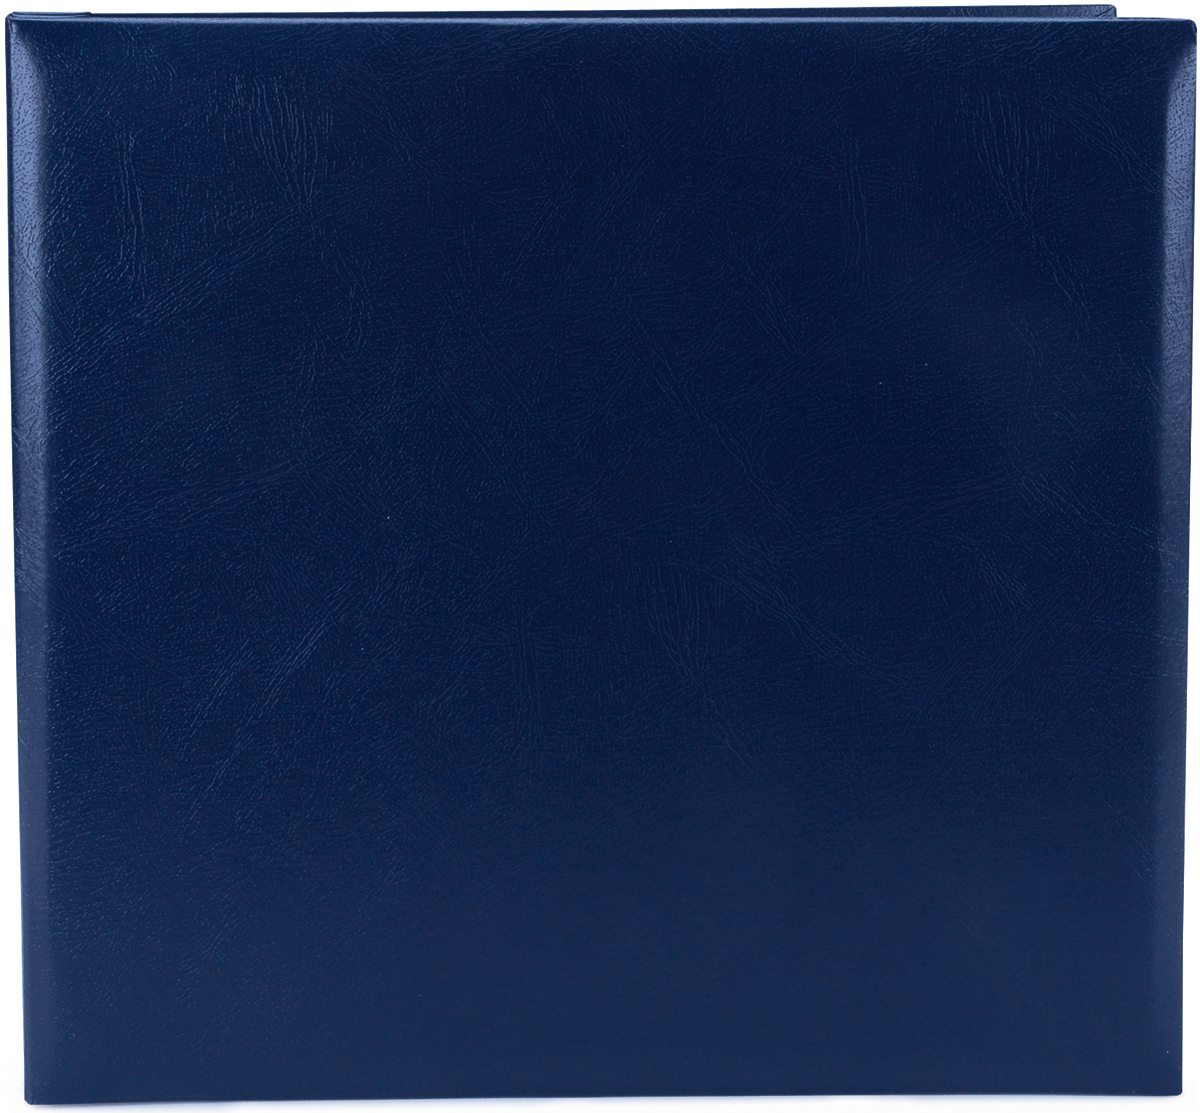 Pioneer Photo Albums MB10-NB 12 x 12 Scrapbook Navy Blue - image 2 of 2